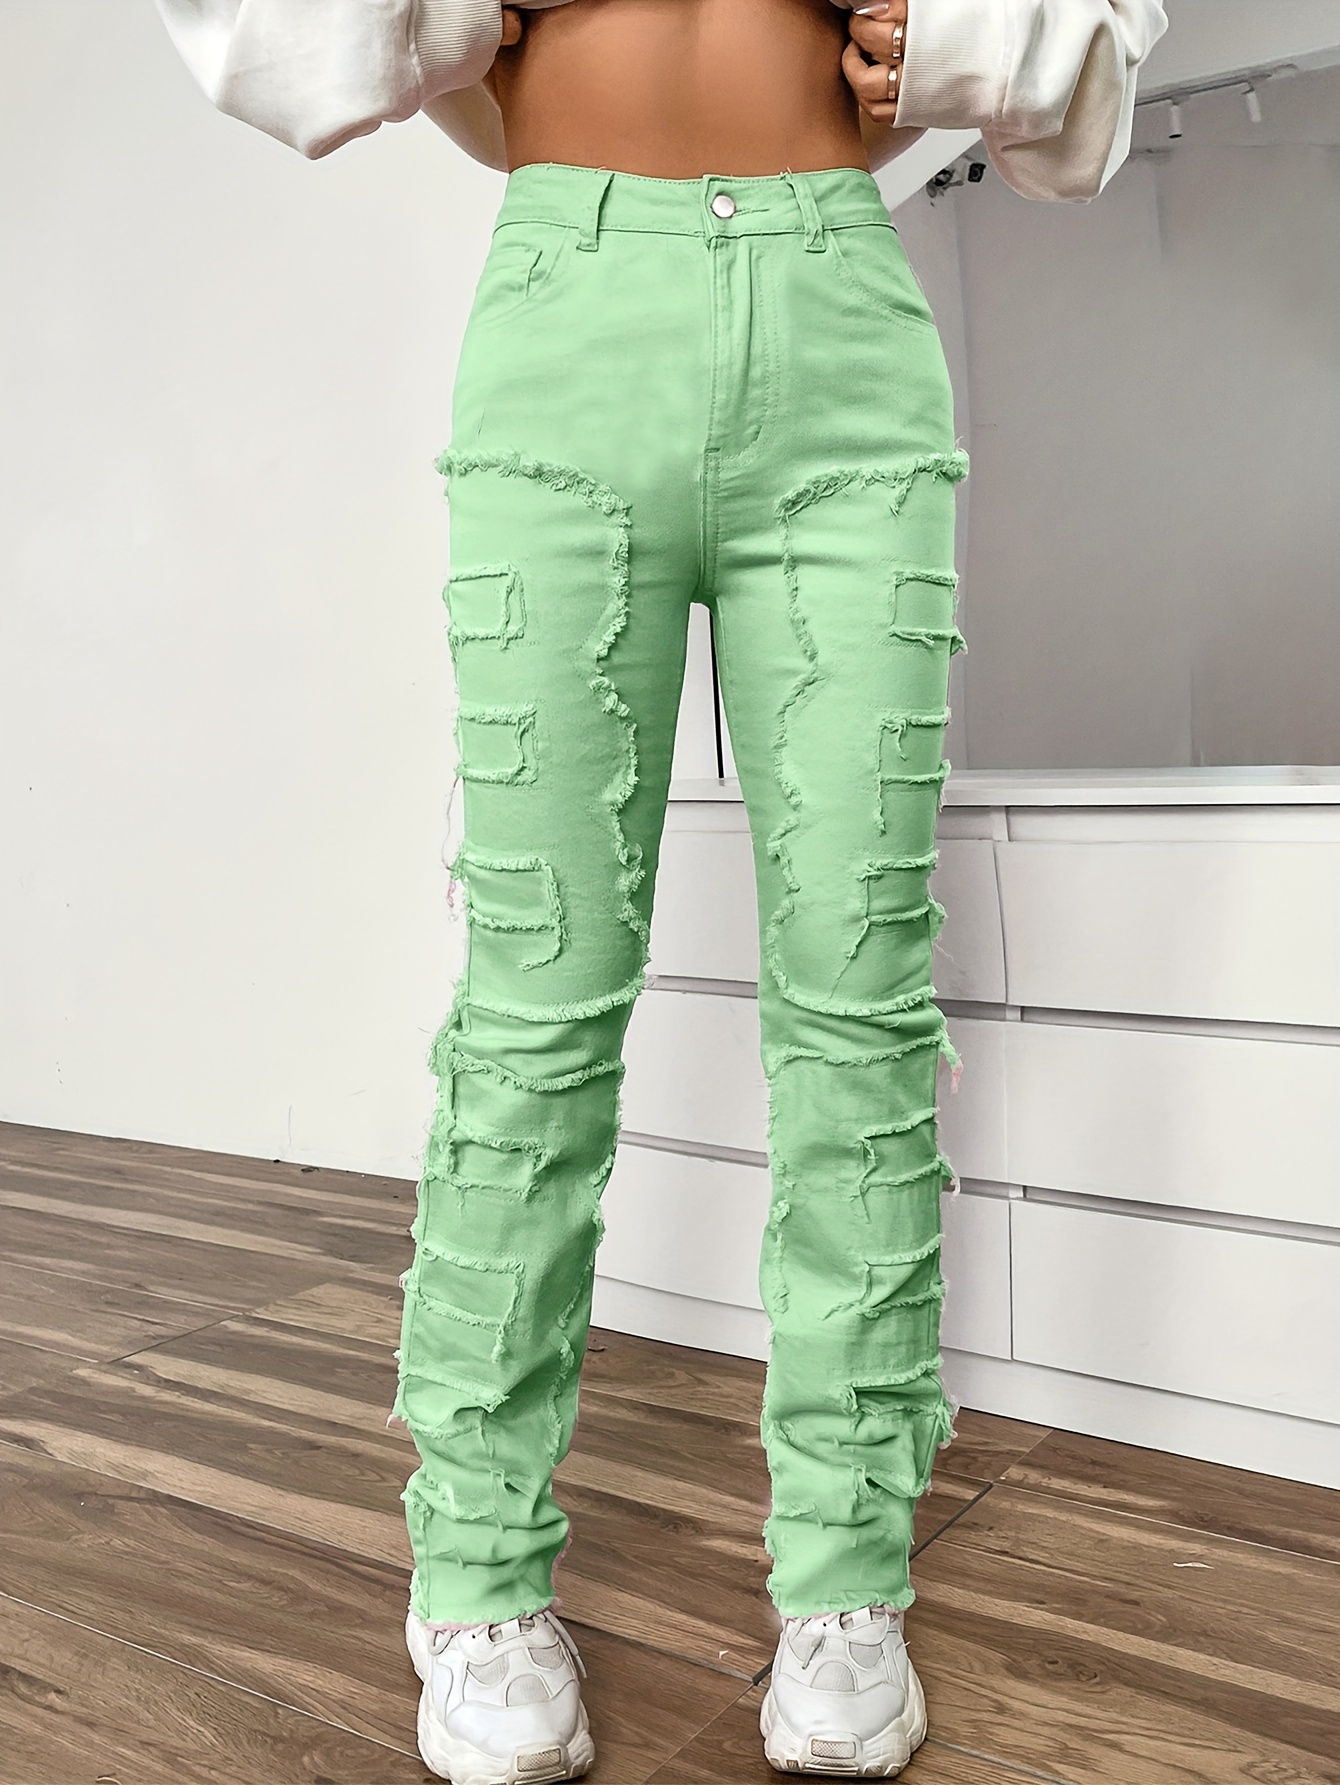 raw trim patchwork straight jeans mid stretch distressed chic denim pants womens denim jeans clothing